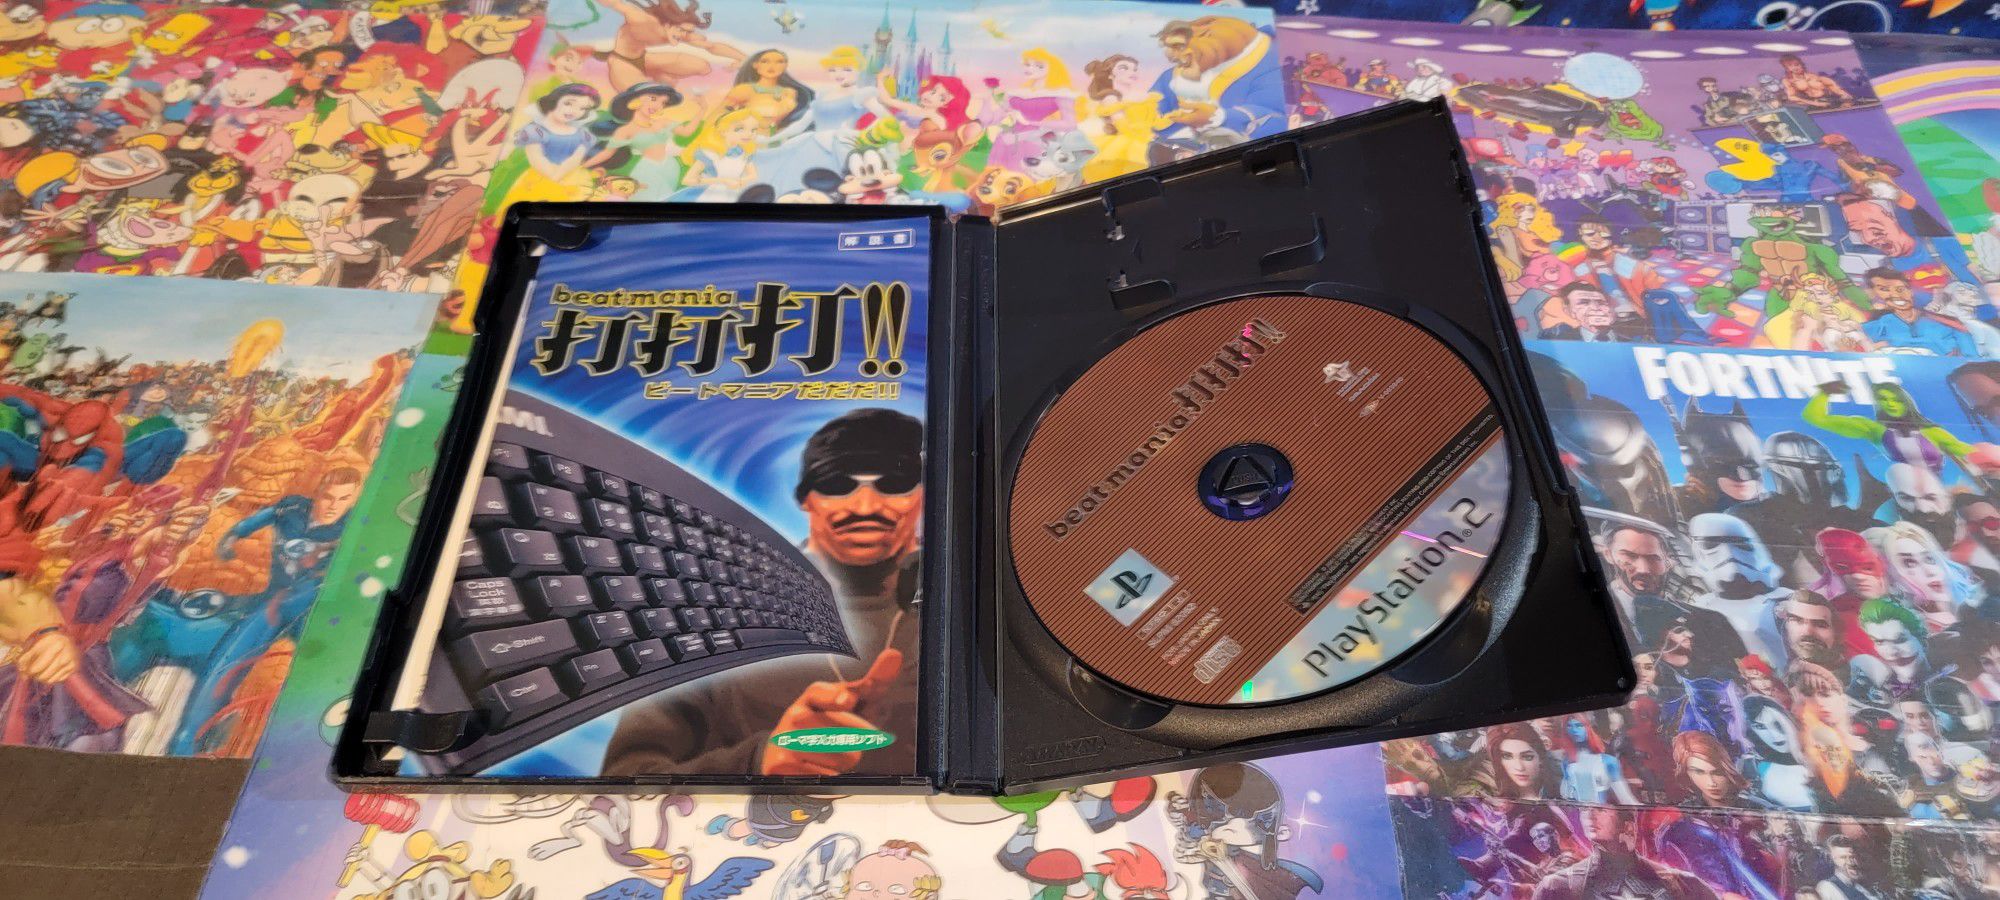 Beatmania DaDaDa! on PS2 Standalone Game 